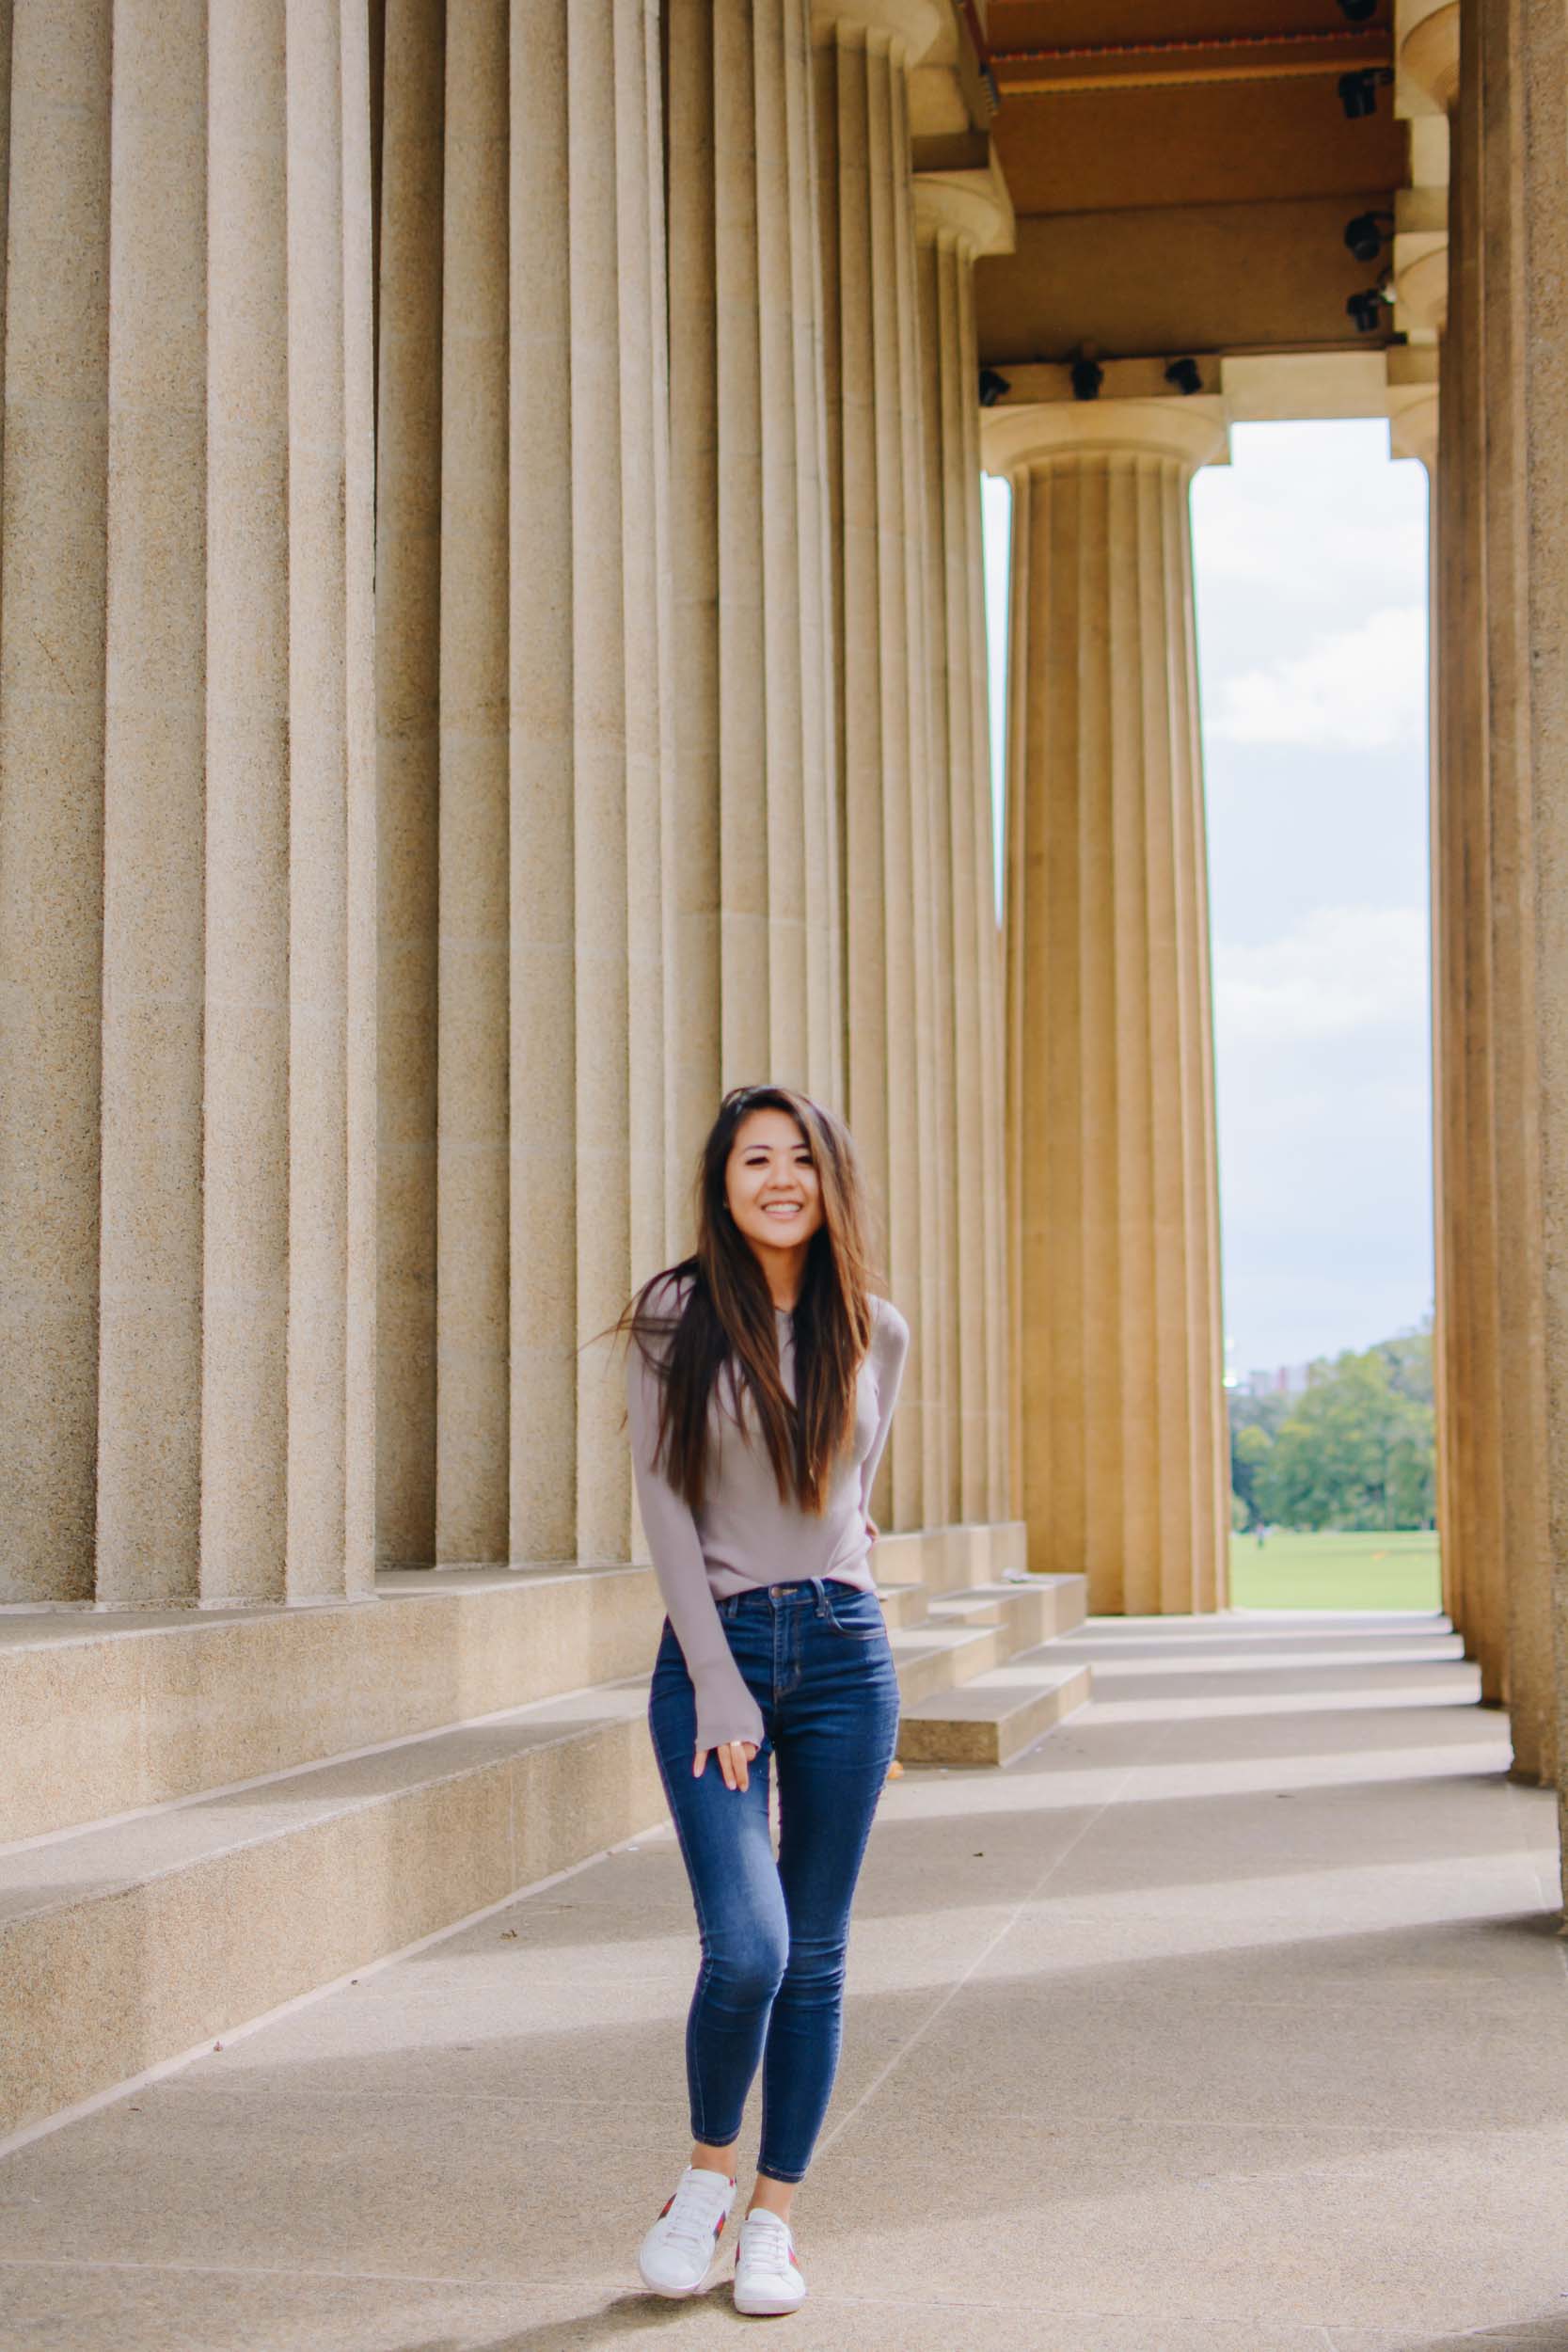 Lifestyle blogger Demi Bang visits the Parthenon in Nashville